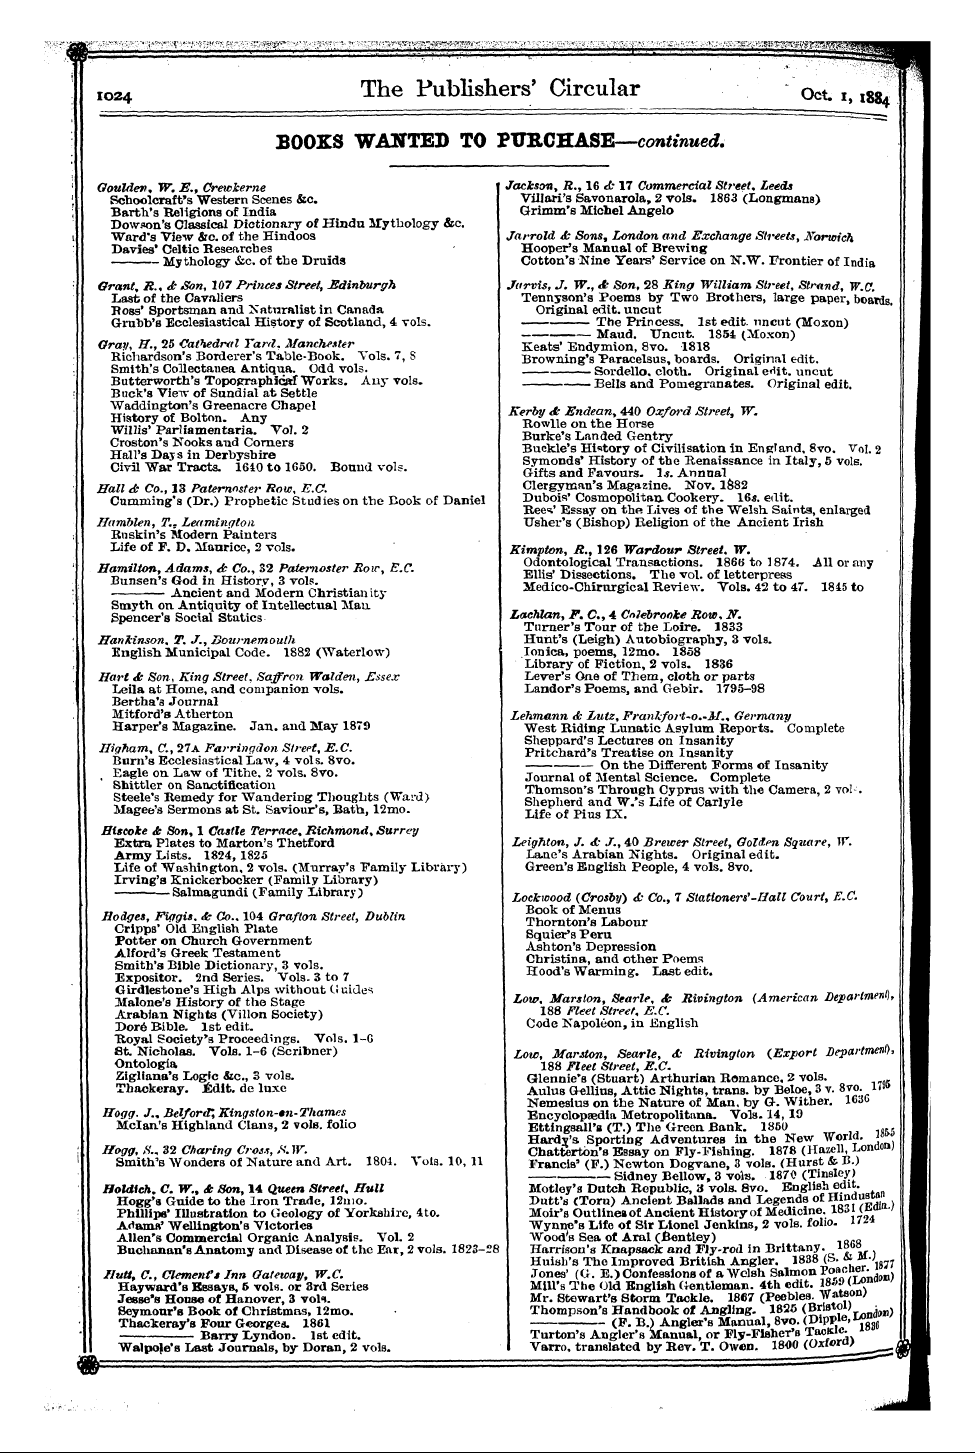 Publishers’ Circular (1880-1890): jS F Y, 1st edition - Acock, J. A., 21 Broad Street, Oxford Fr...